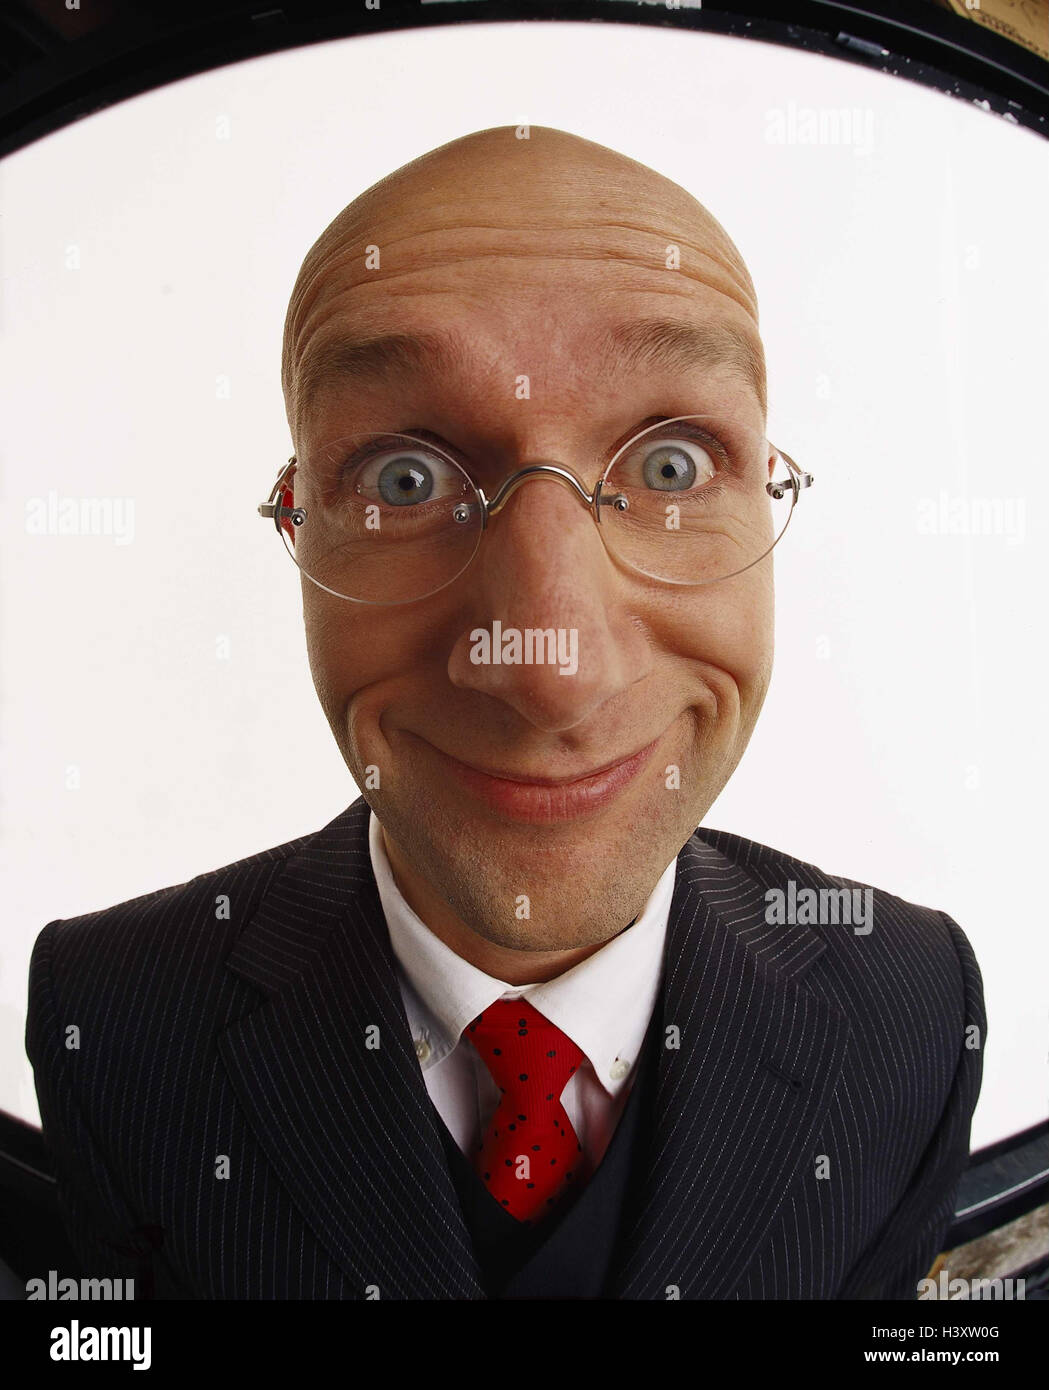 What glasses suit a bald head